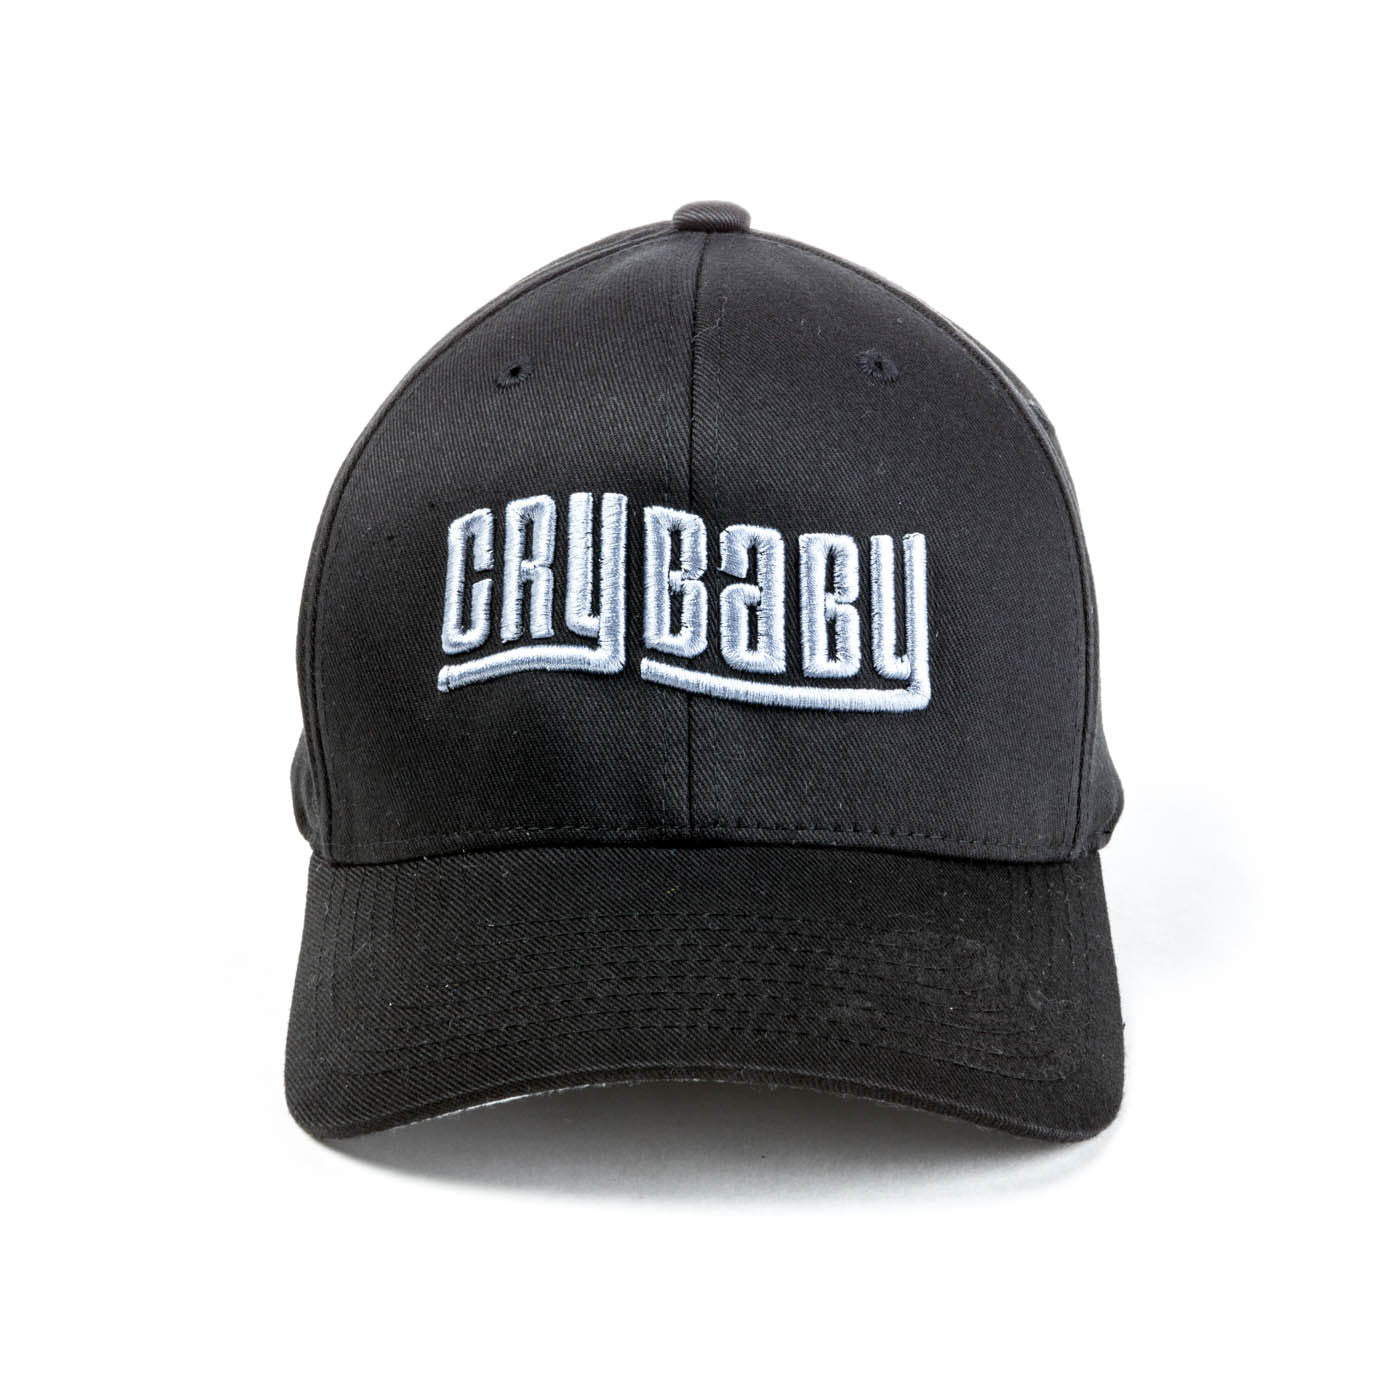 Dunlop Crybaby Baseball Cap